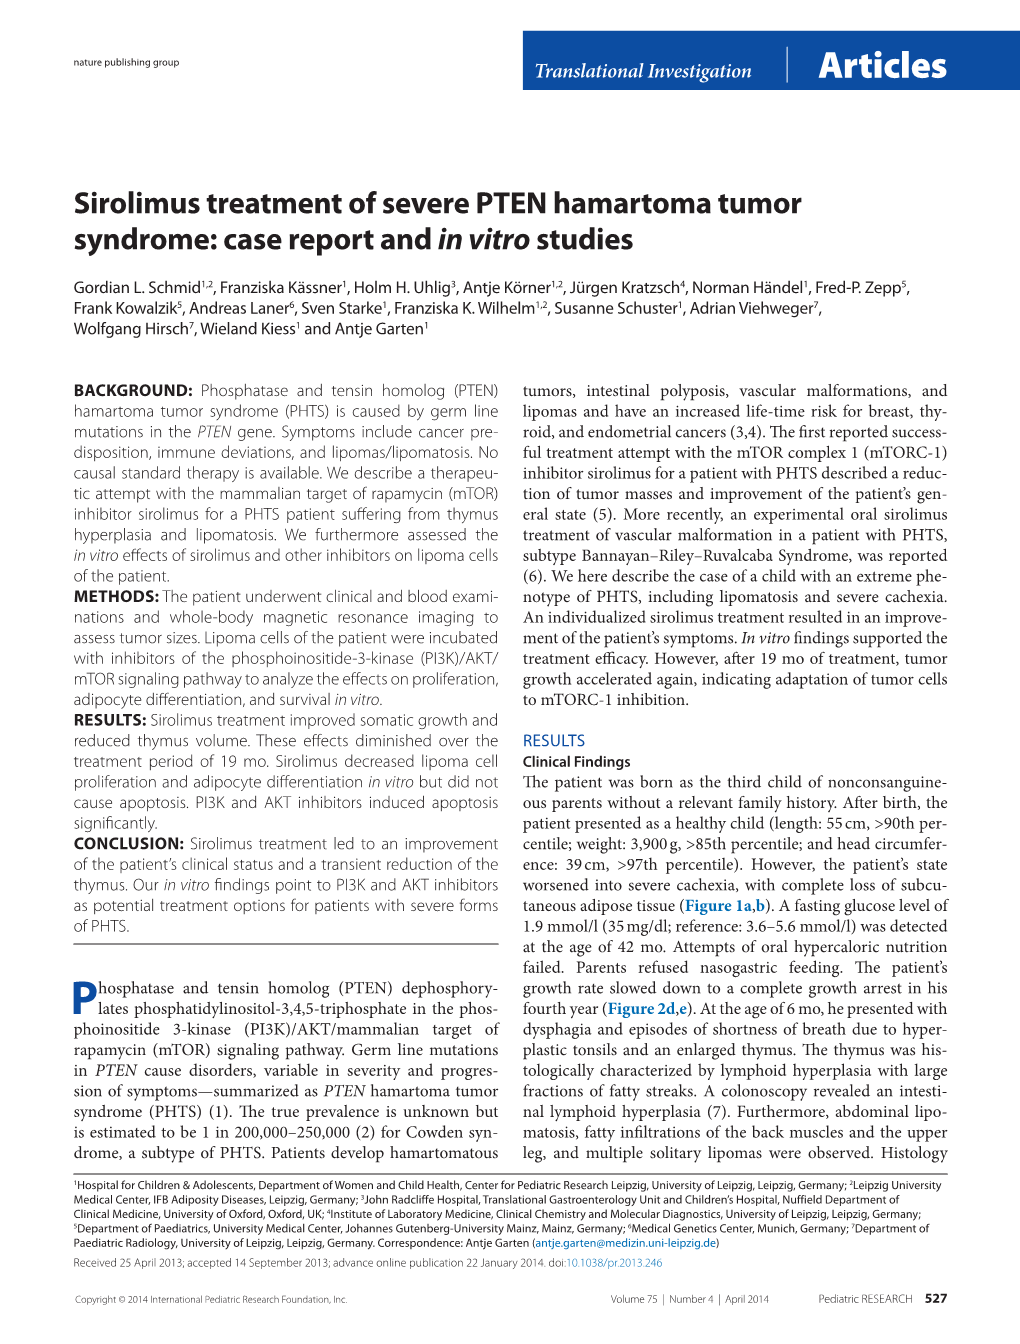 Sirolimus Treatment of Severe PTEN Hamartoma Tumor Syndrome: Case Report and in Vitro Studies